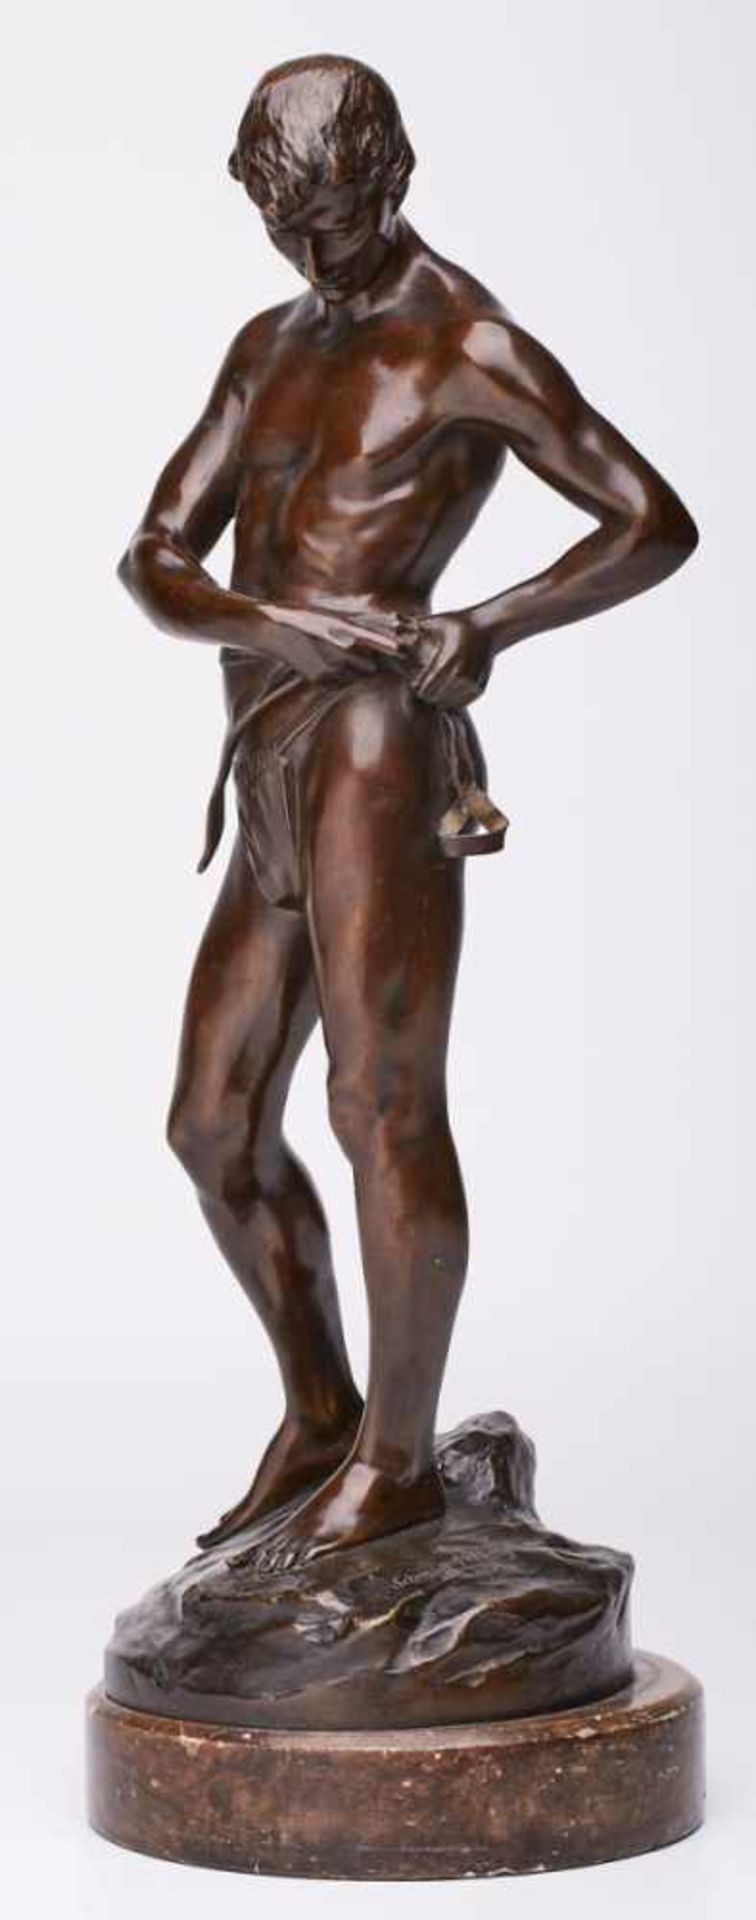 Bronze Julius-Paul Schmidt-Felling(deutsch, 1835 - 1920) David, dat. 1904. Rotbraun patiniert.